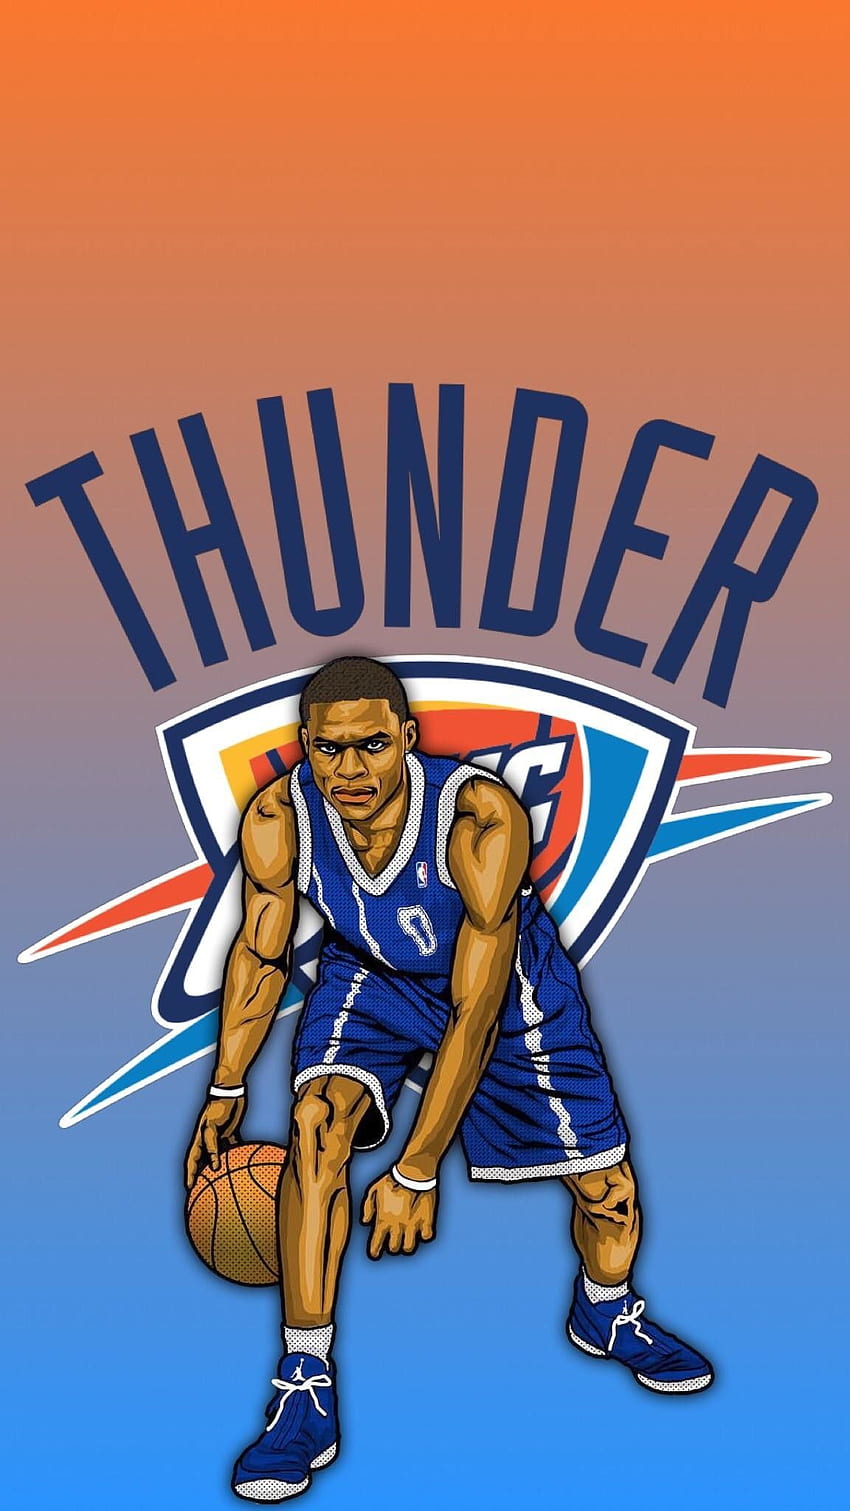 Fundo de Russell Westbrook, jogadores da NBA dos desenhos animados Papel de parede de celular HD